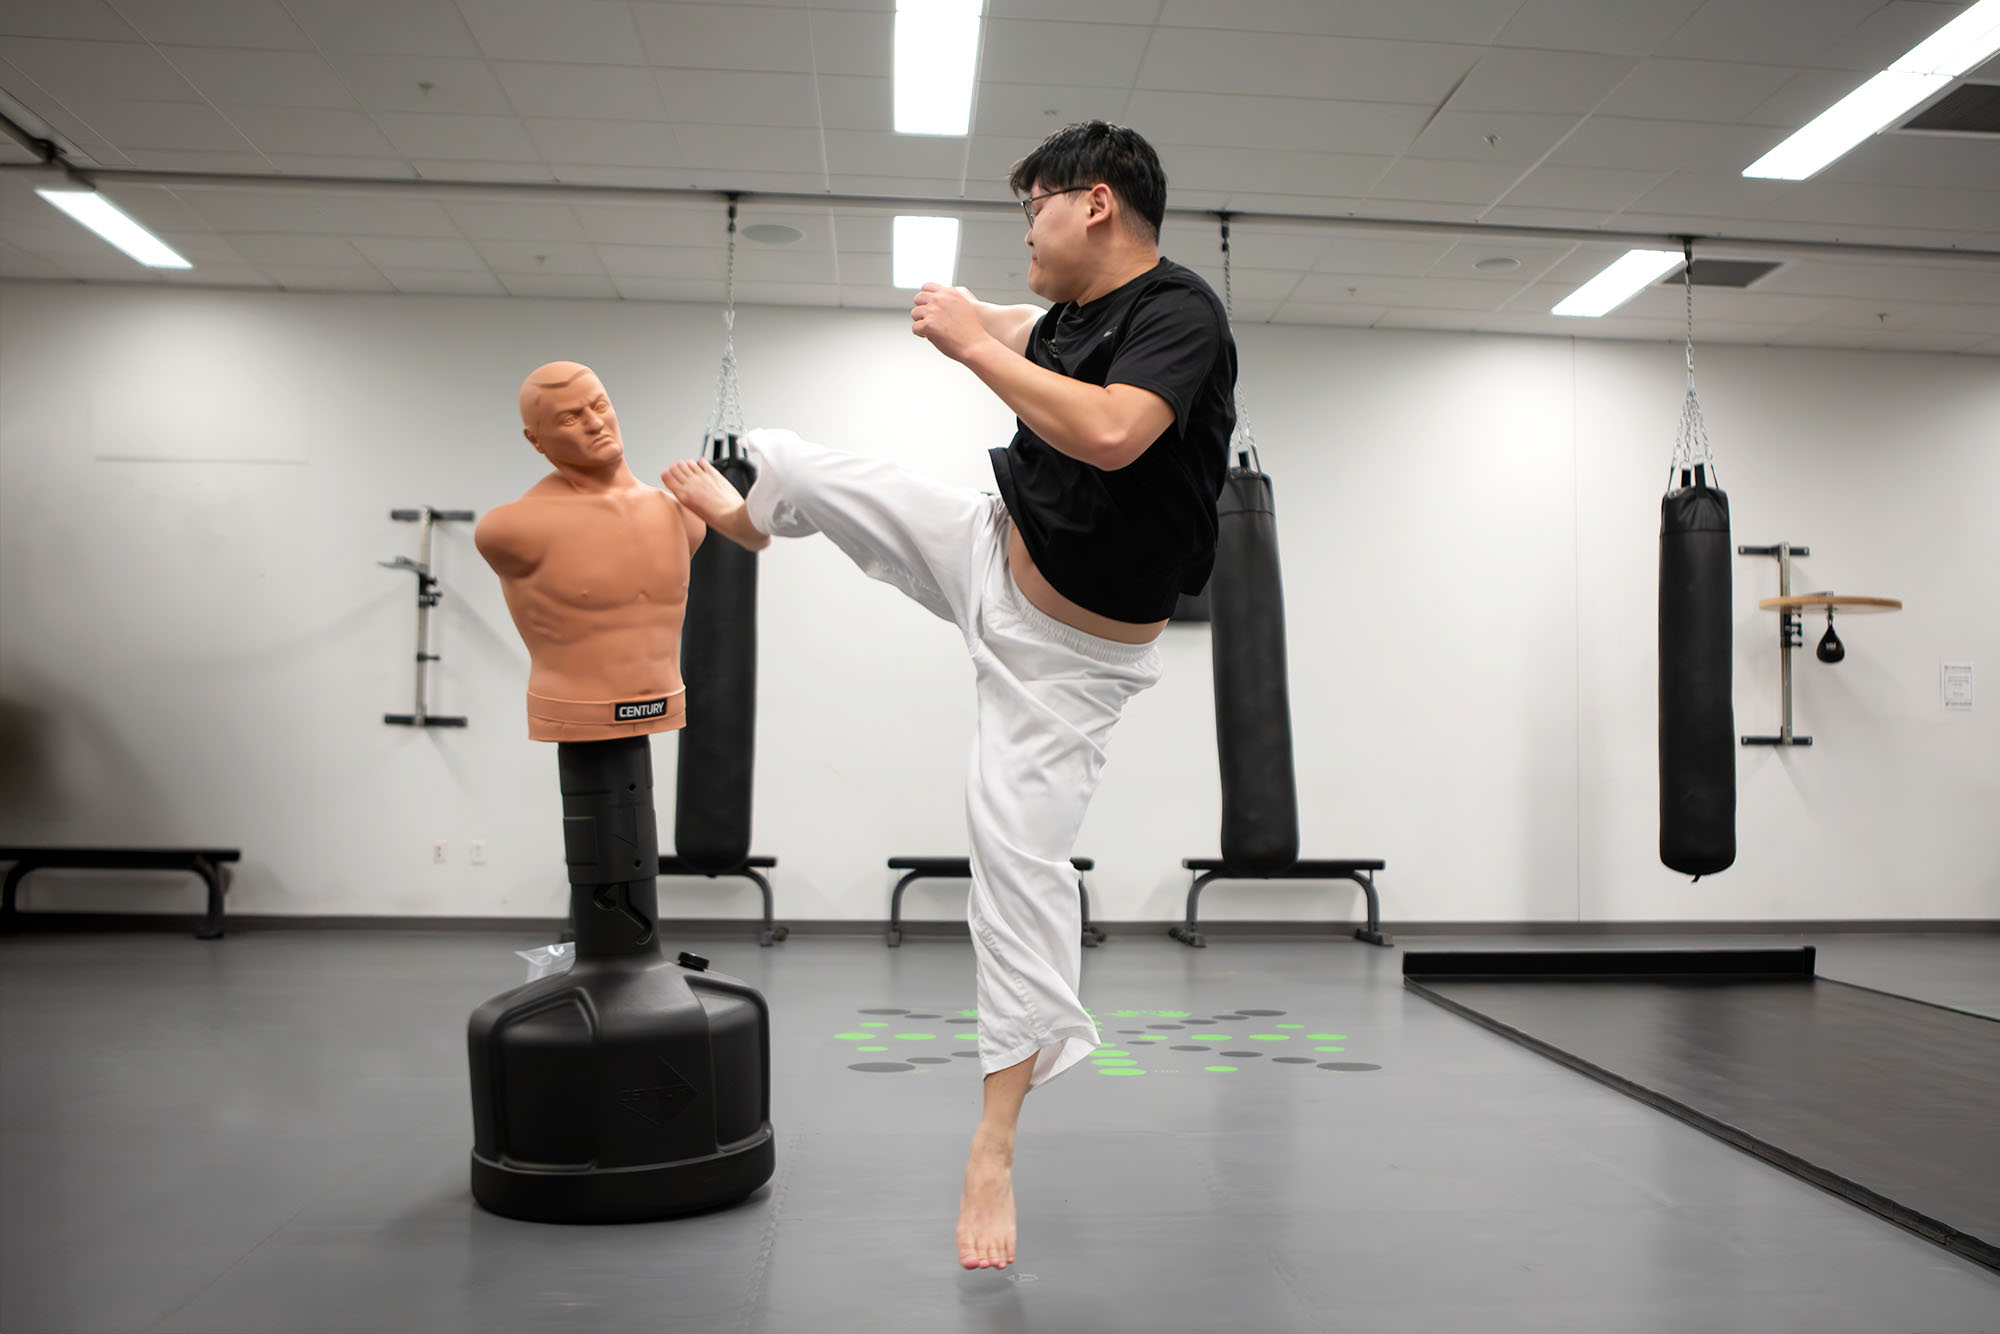 Student kicking a martial arts training dummy